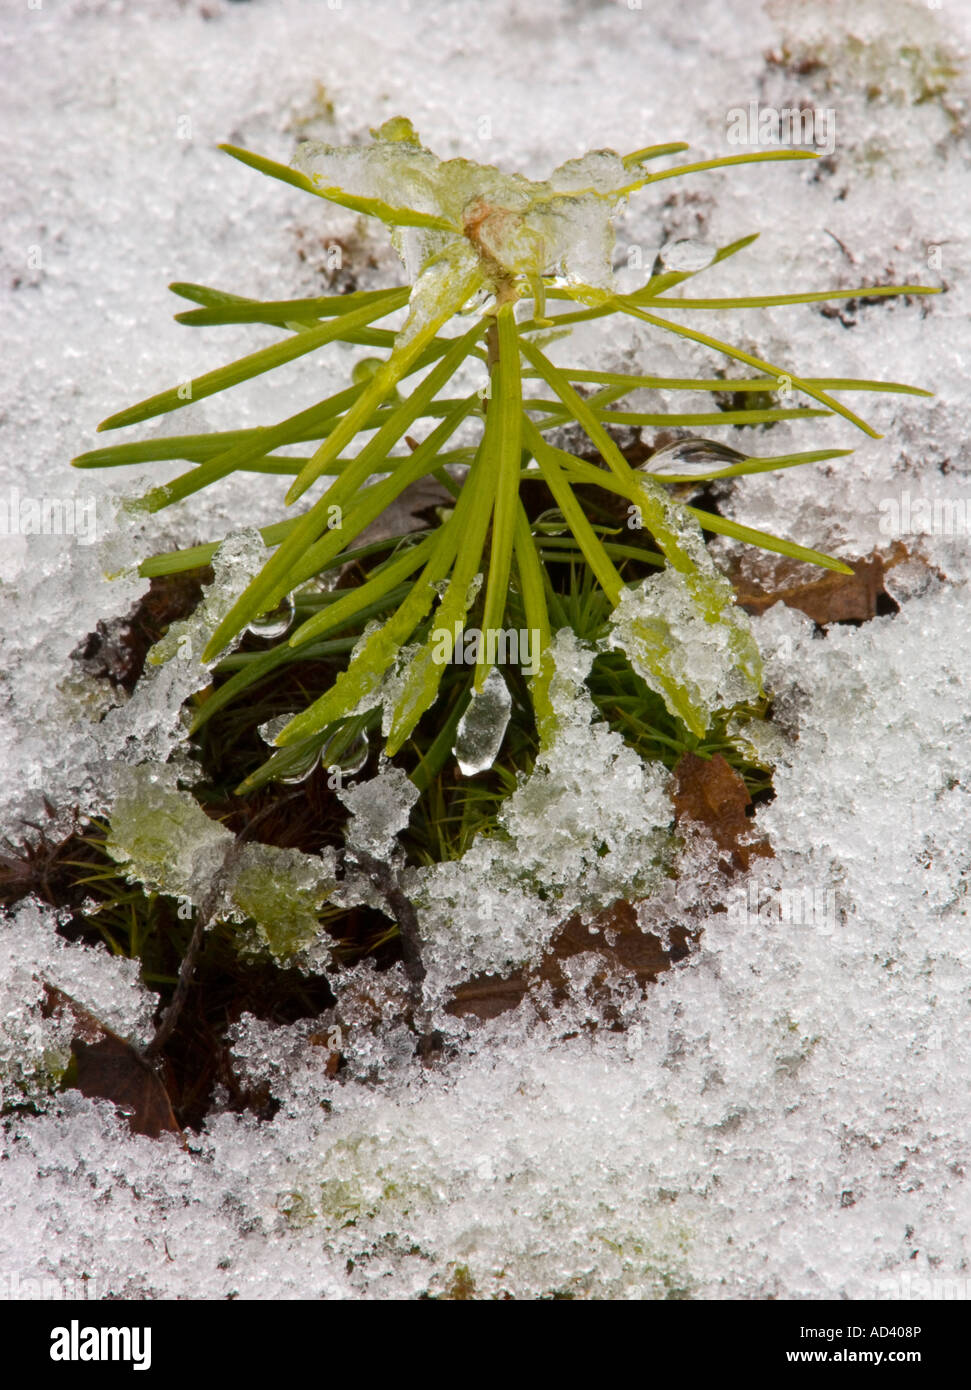 Balsam fir (Abies balsamea) seedling in wet snow, Greater Sudbury, Ontario, Canada Stock Photo